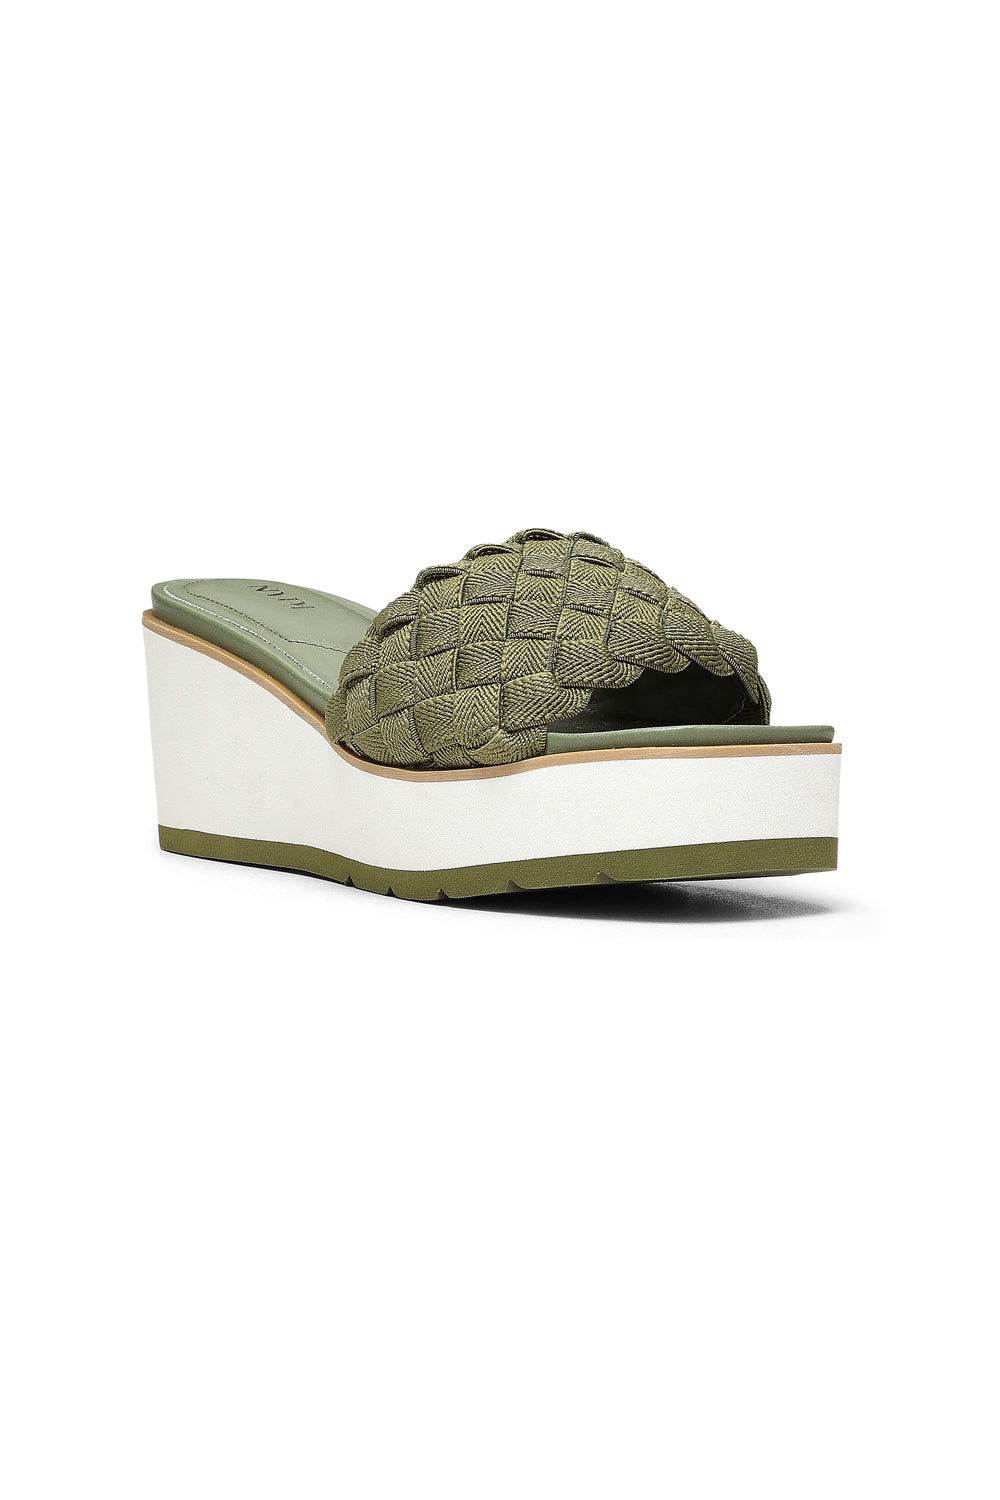 NYDJ Rora Wedge Sandals In Elastic - Olive